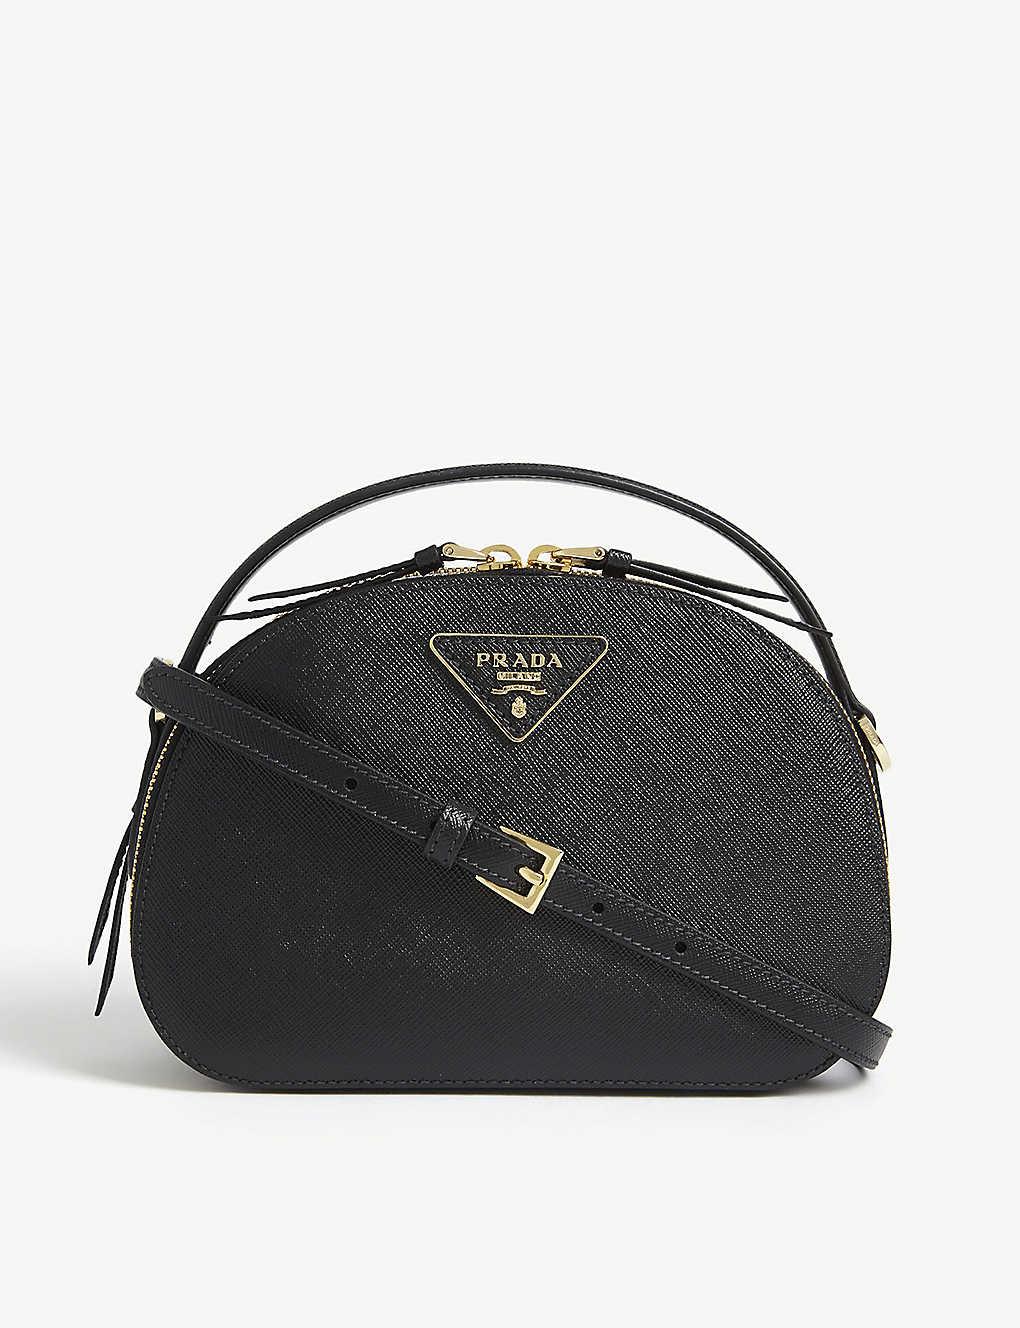 Prada Odette Saffiano Leather Bag